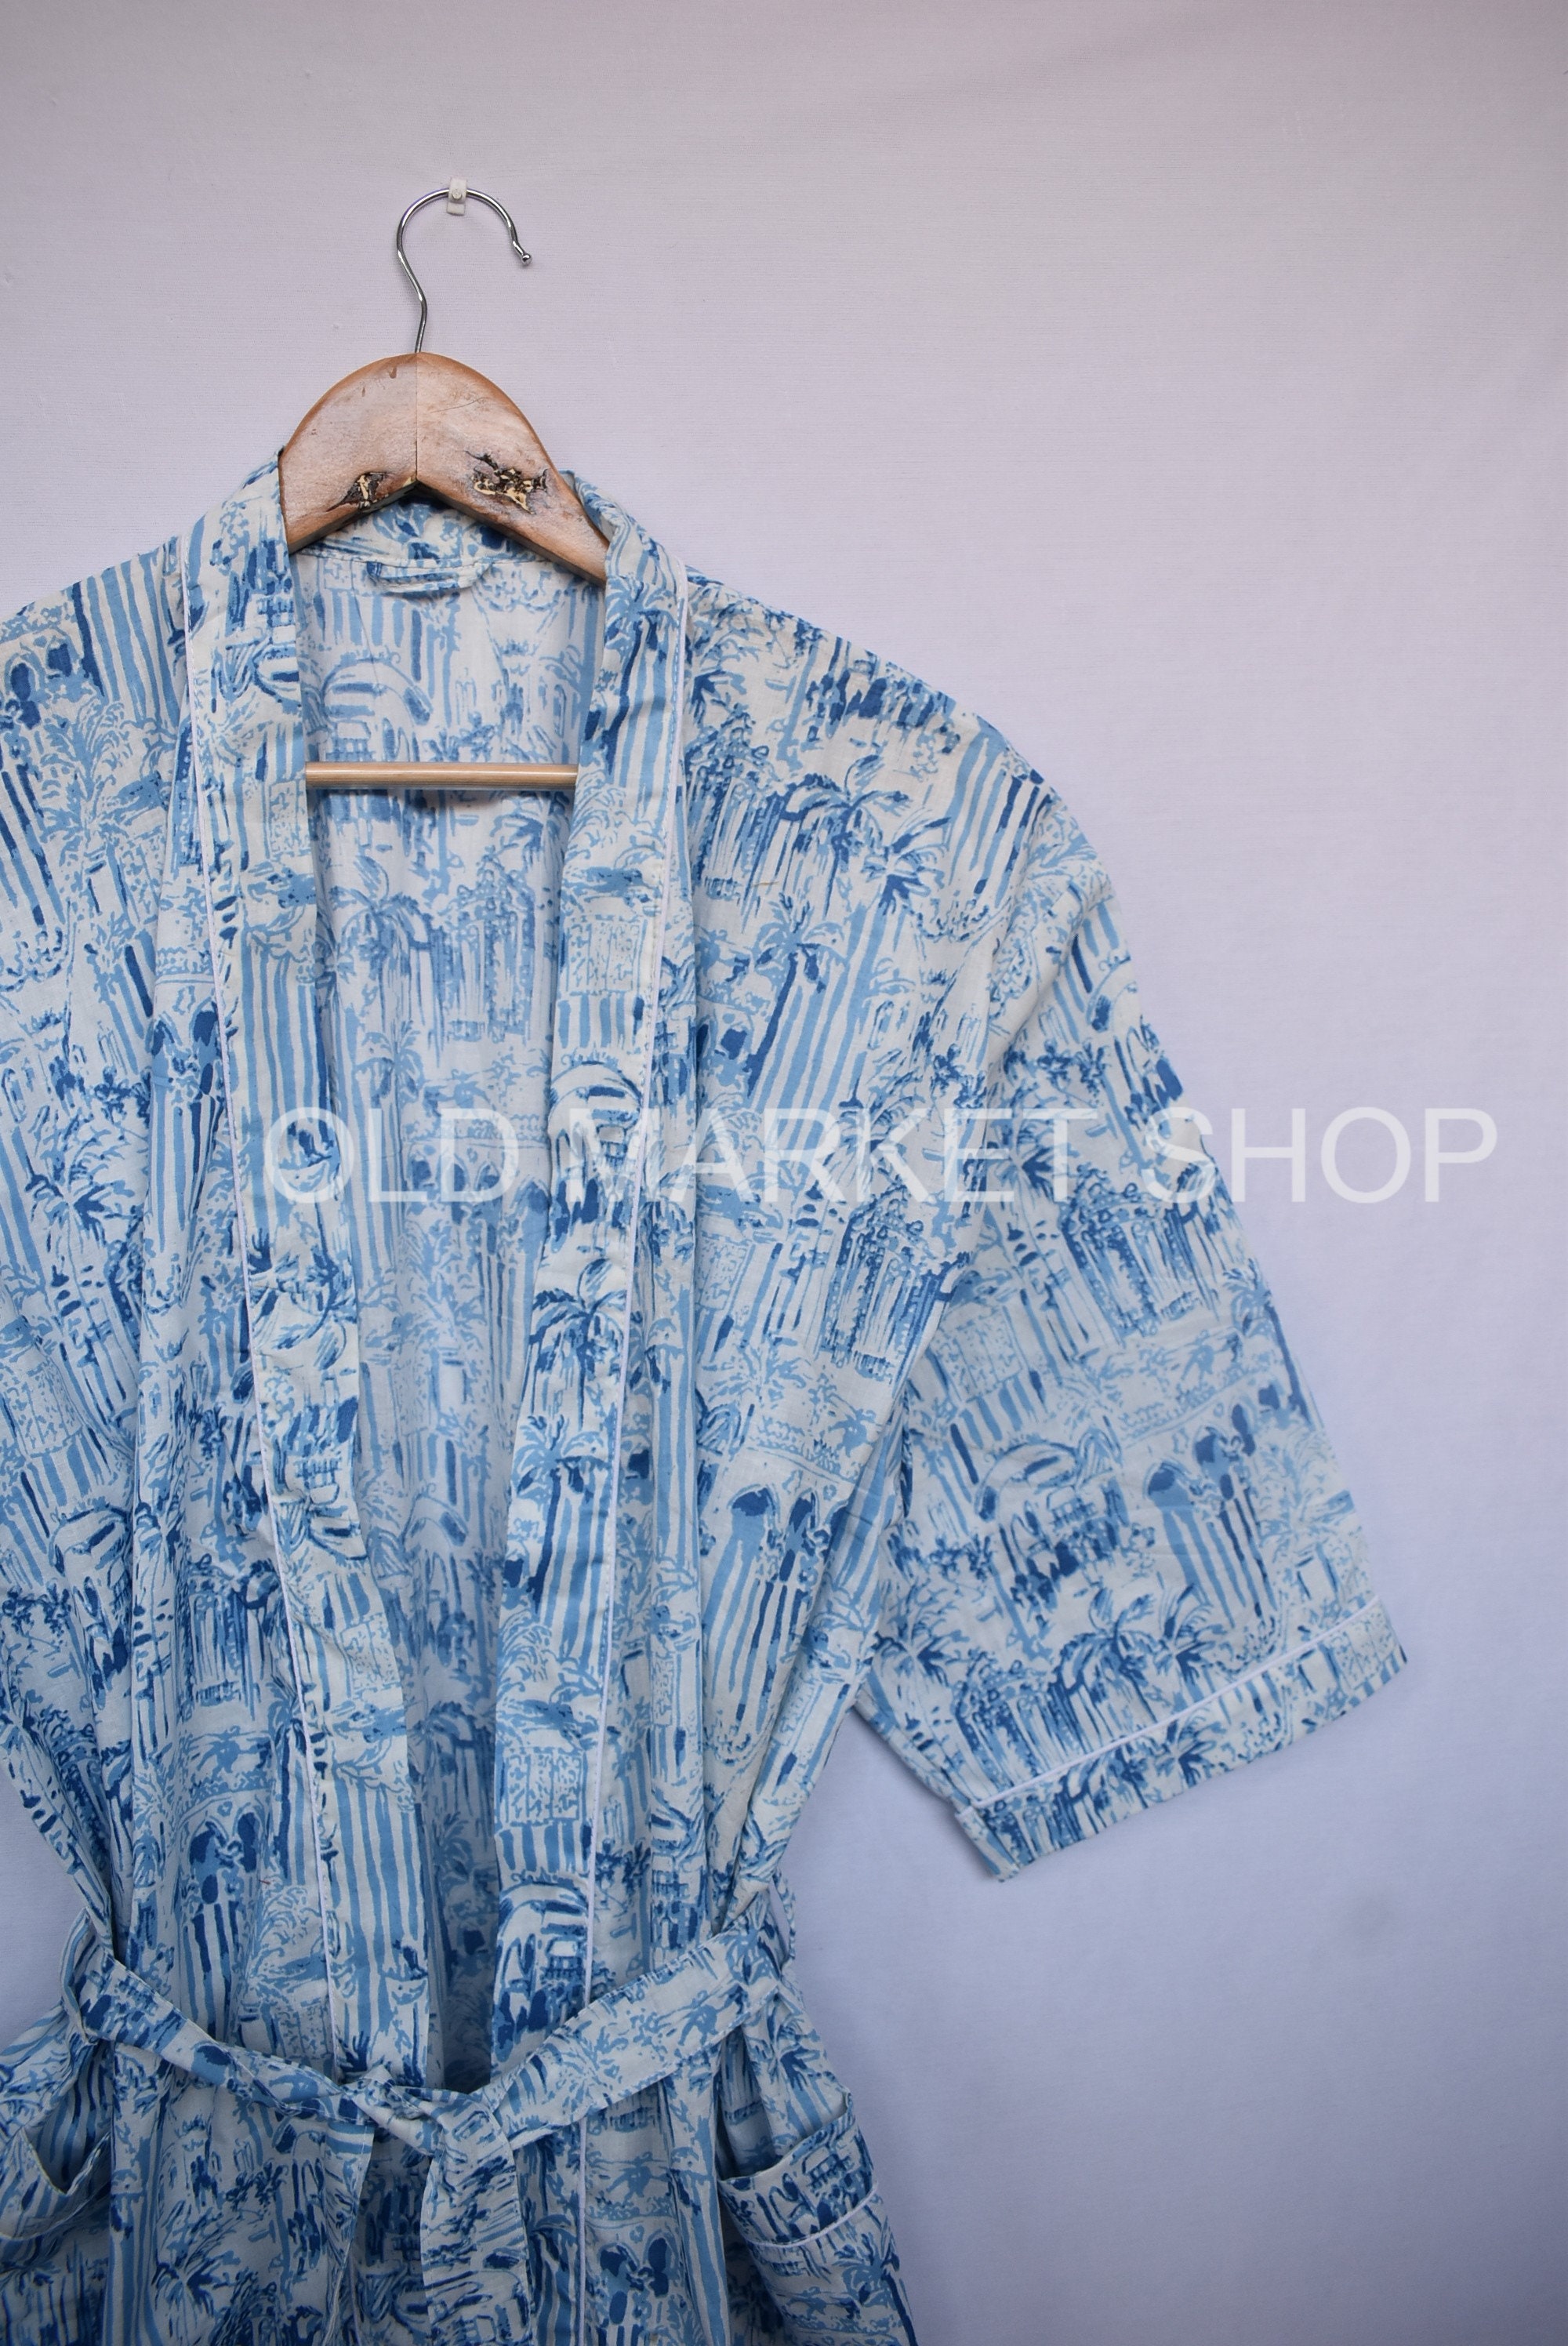 Blue Indian Cotton Sleepwear Robes Nightdress Kimono | Etsy